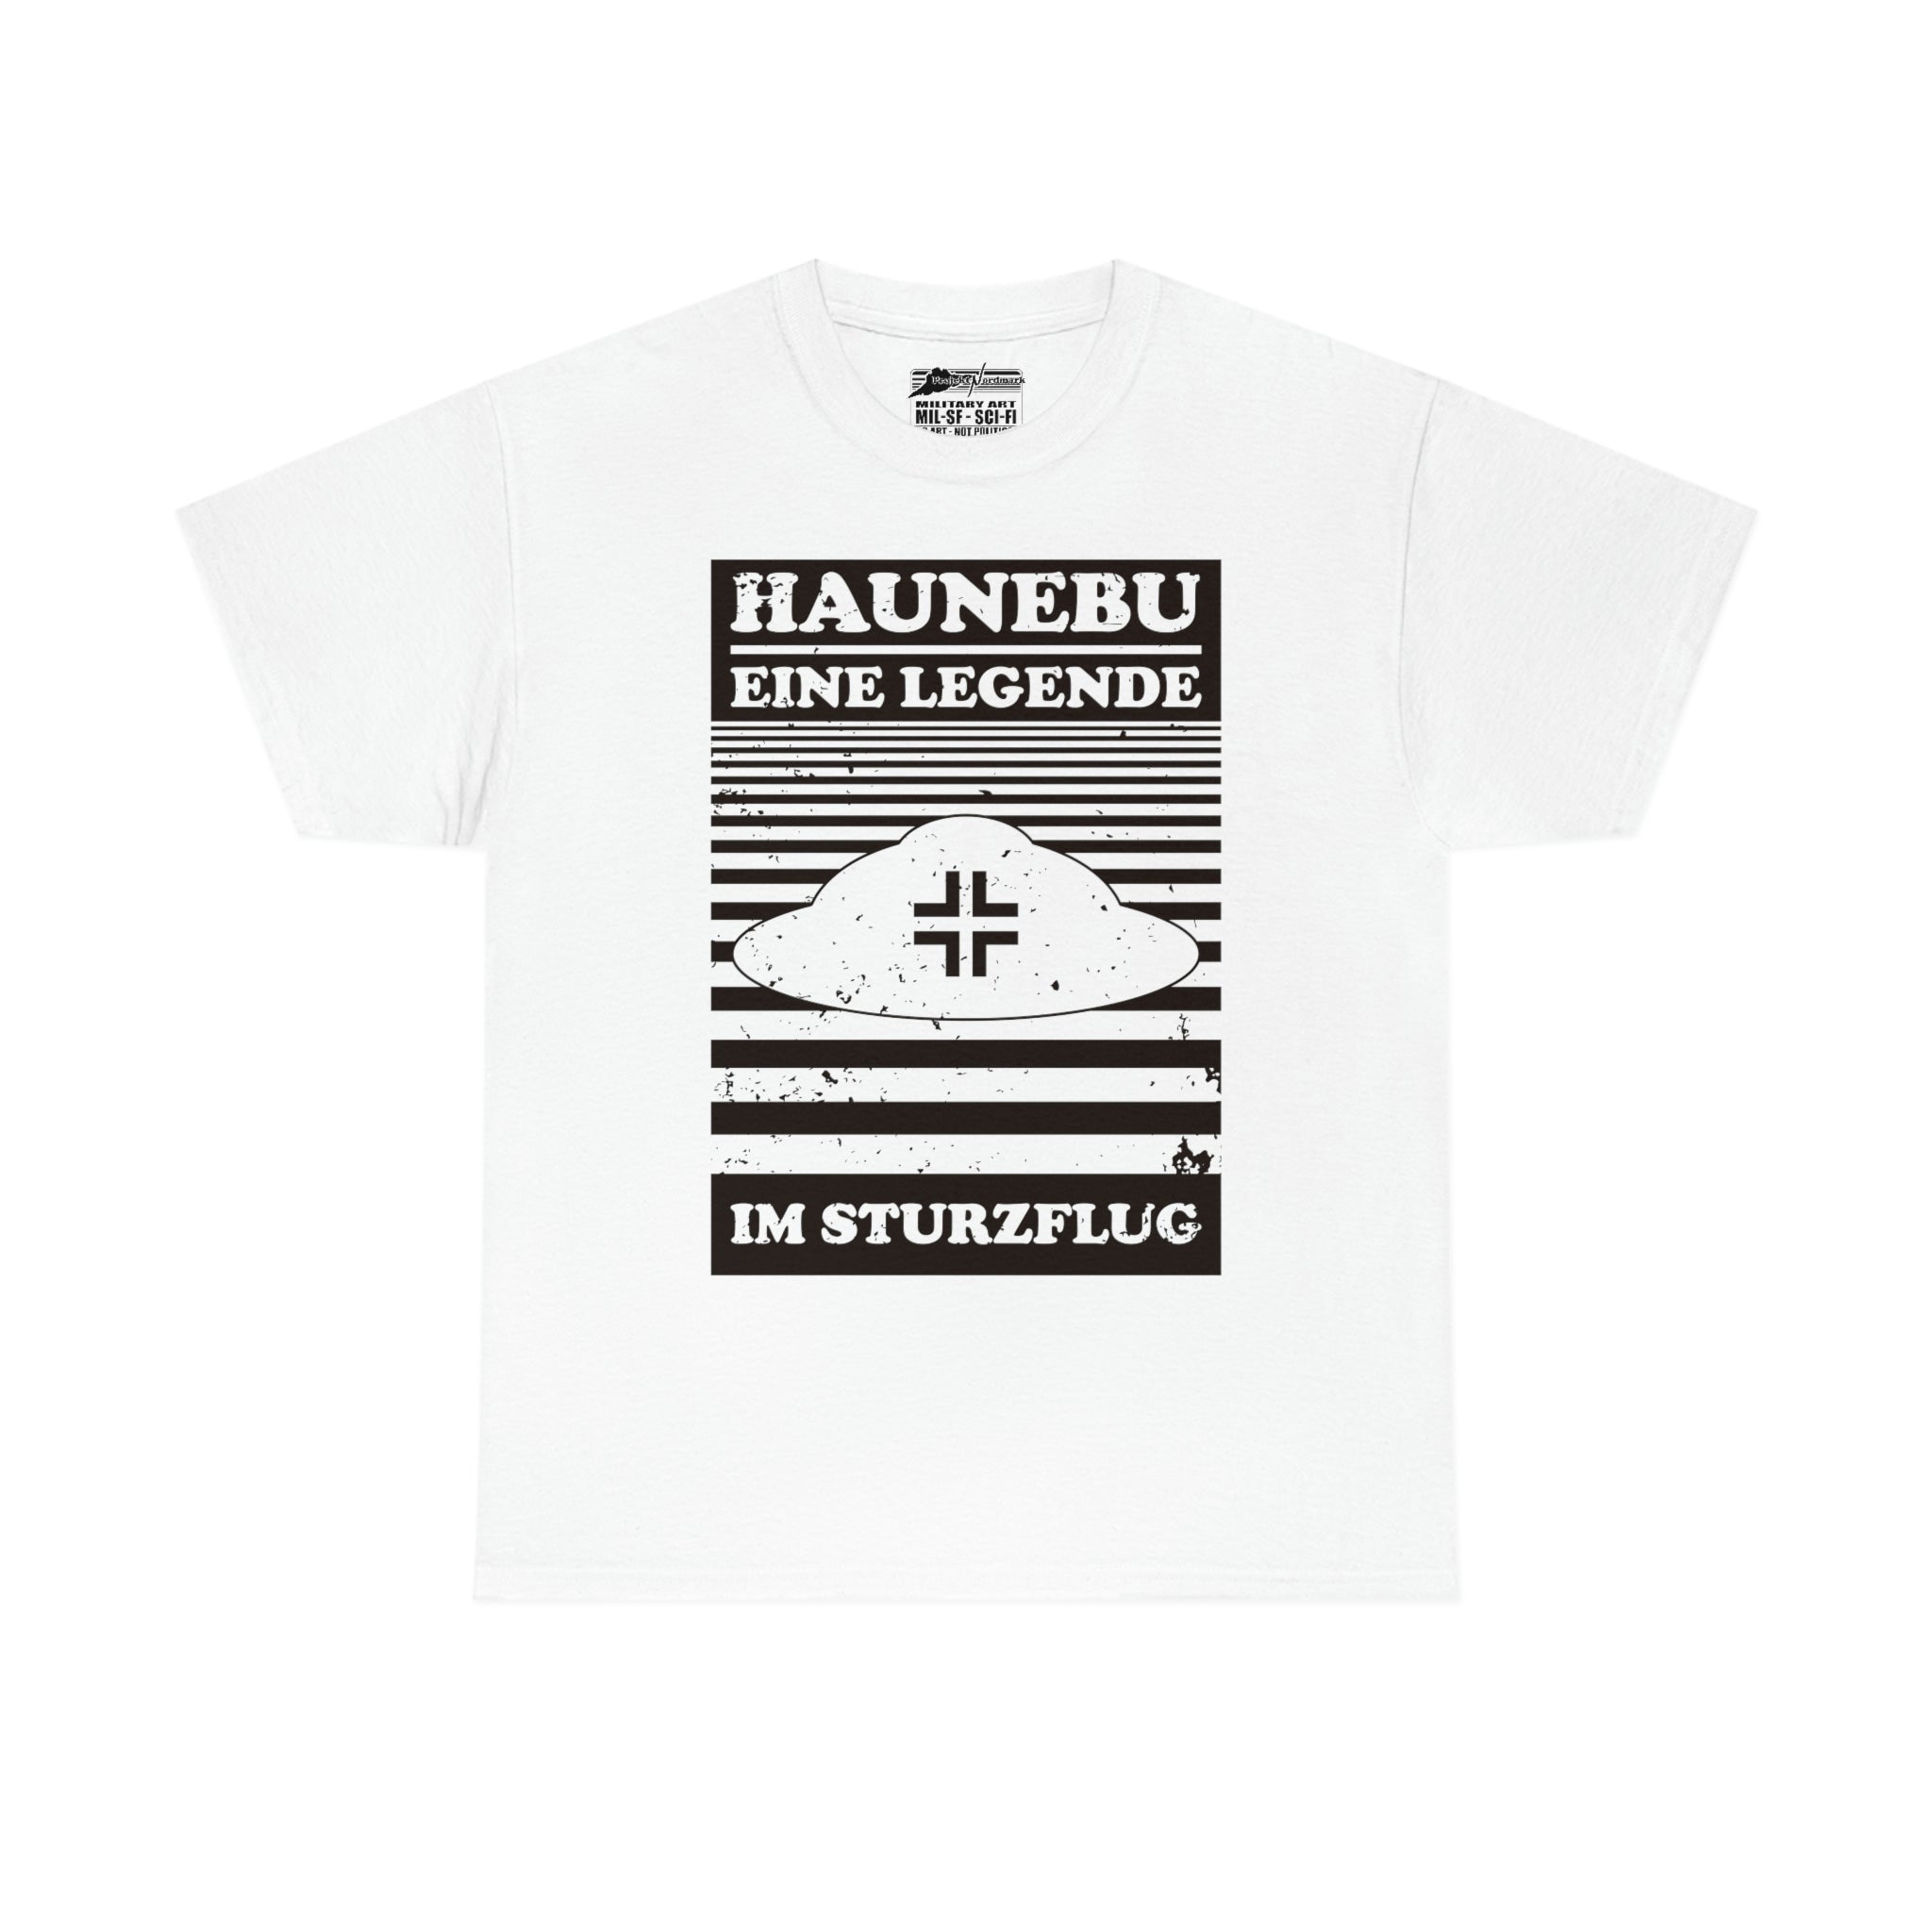 Haunebu - Legende 1 - T-Shirt